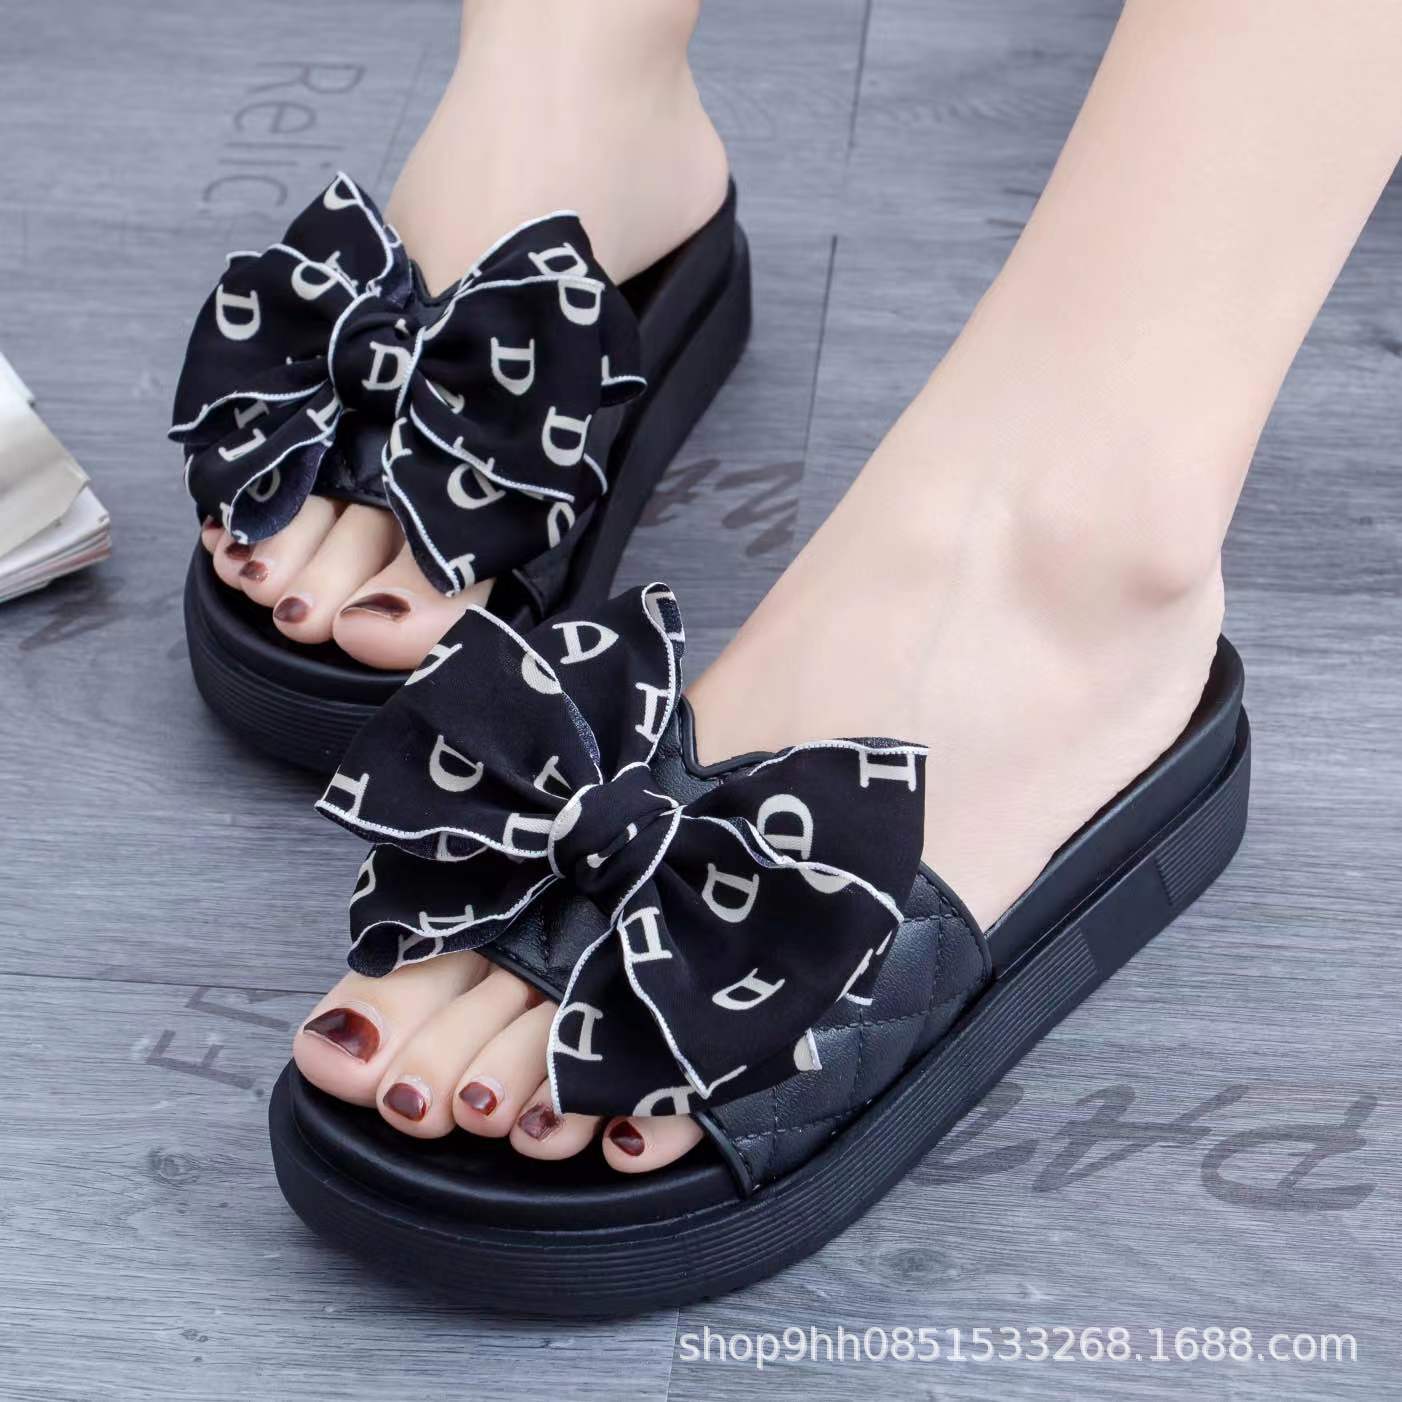 Platform Bow Sandals Women's Outer Wear Online Influencer Fashion Non-Slip Factory Direct Sales Wholesale TikTok Xiaohongshu Delivery